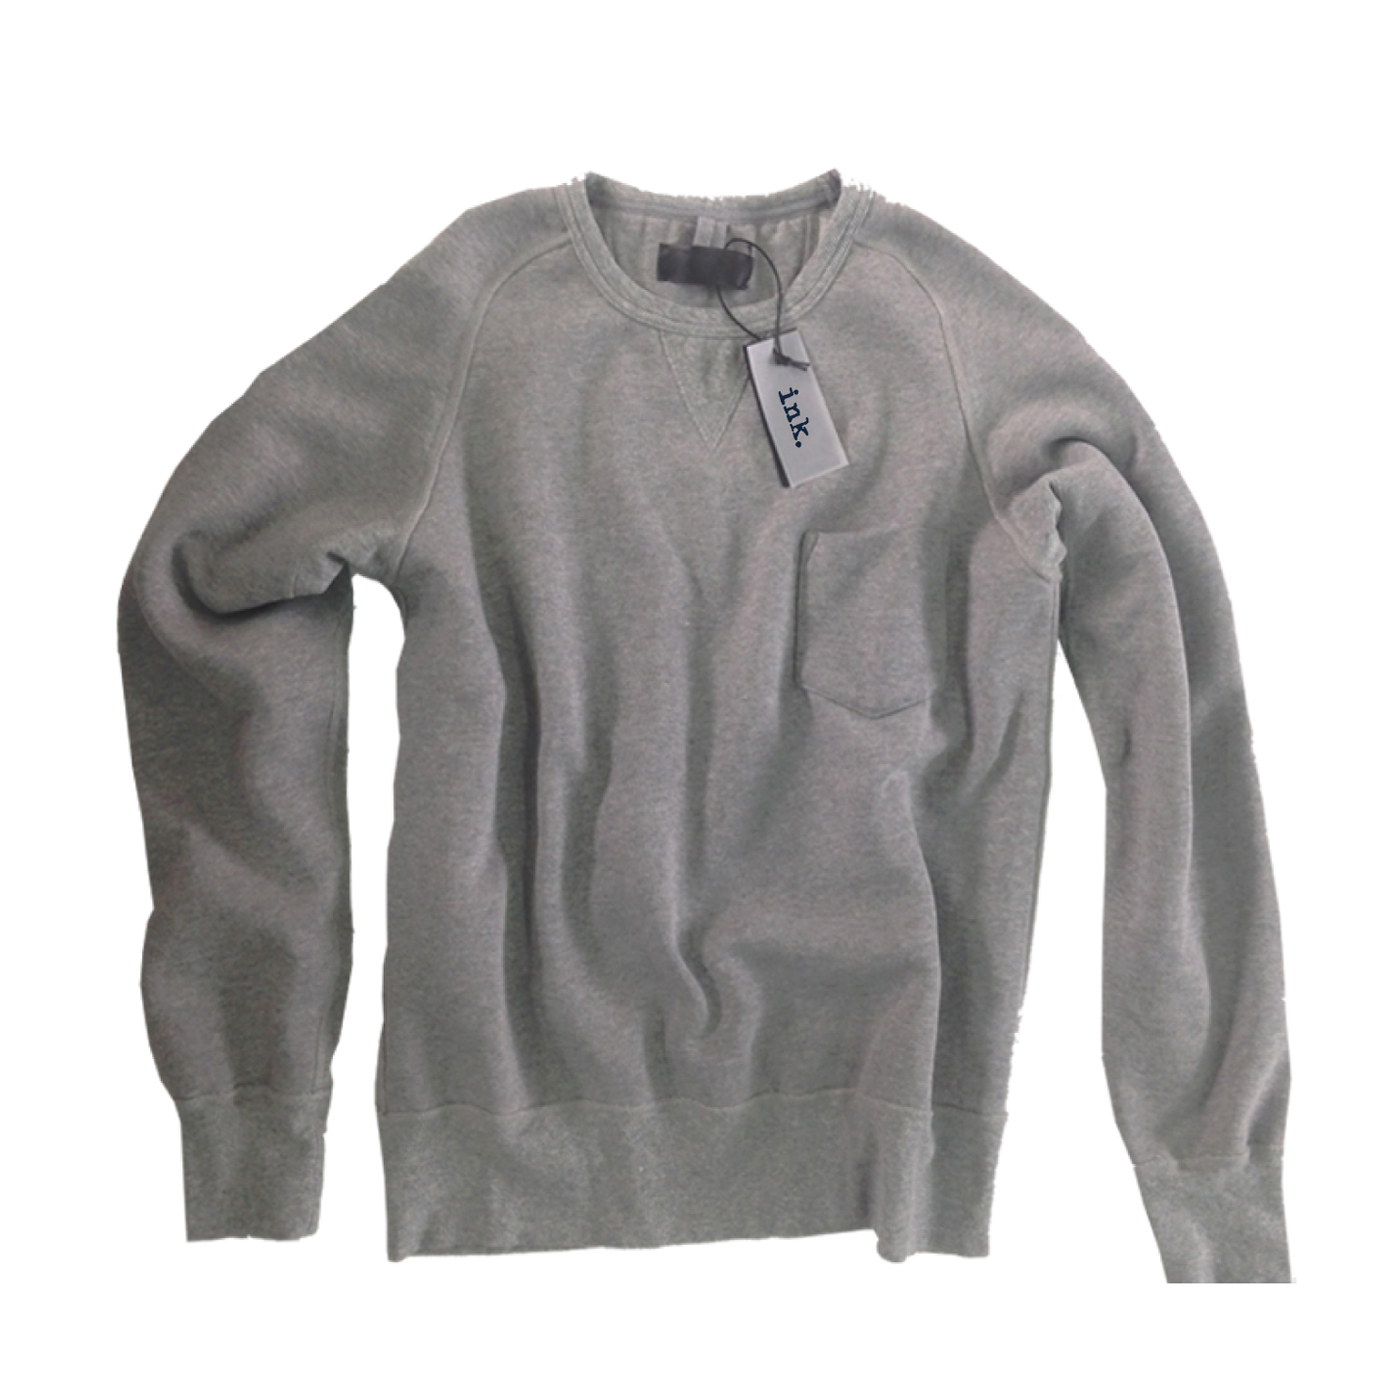 Pollock-ash-crew-neck-sweater-with-pocket-copy